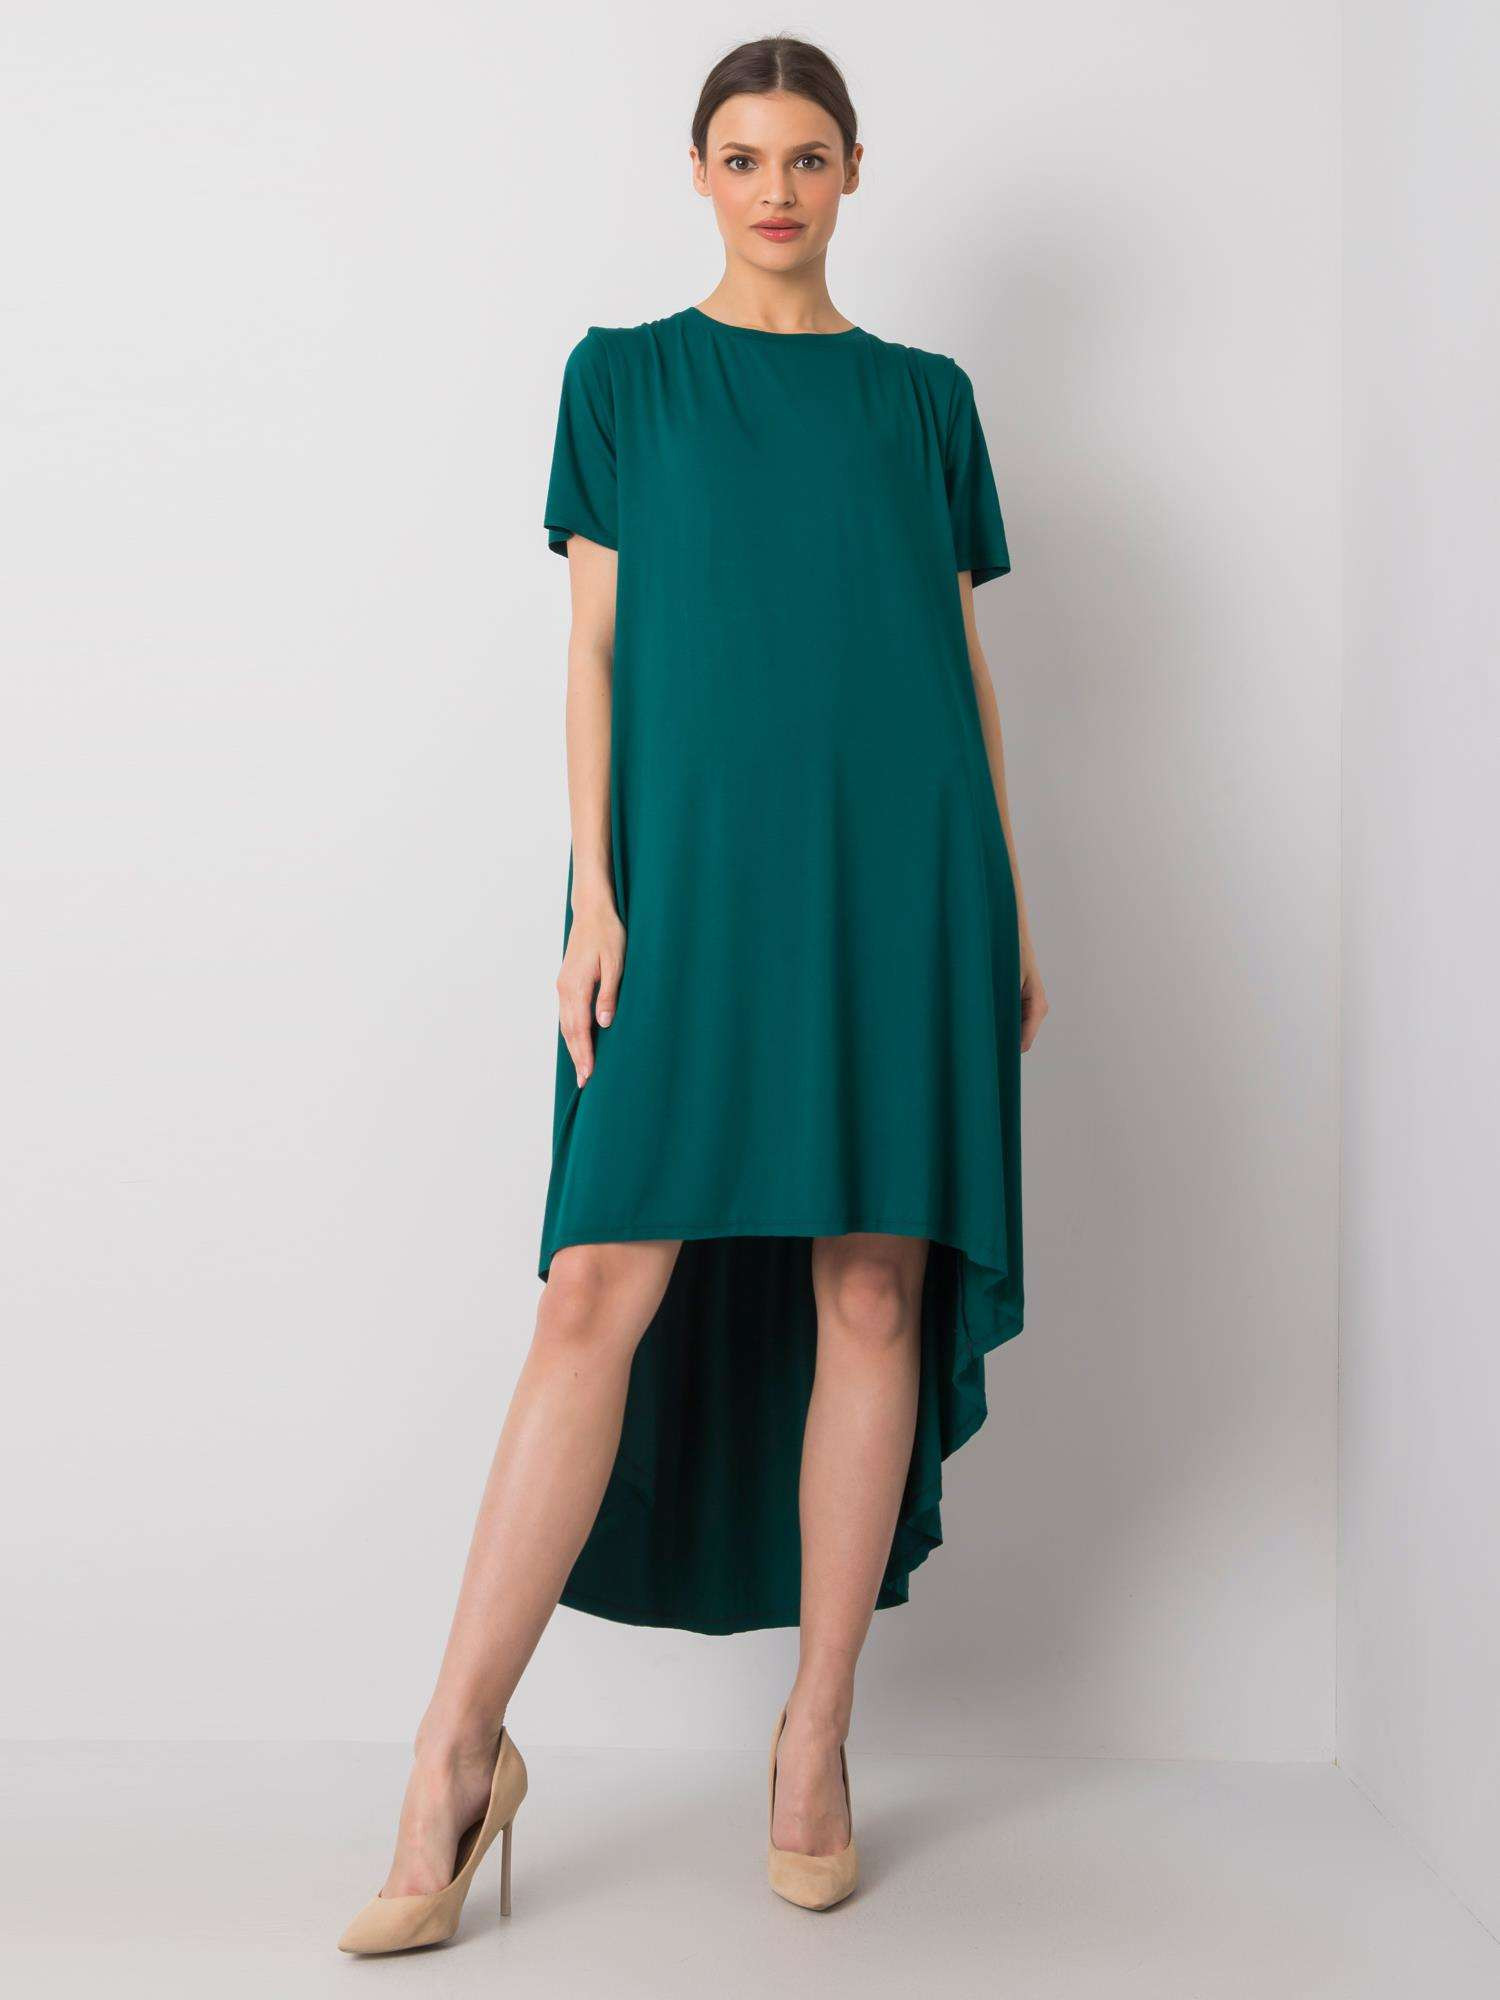 RV SK šaty model 15211683 tmavě zelená S/M - FPrice